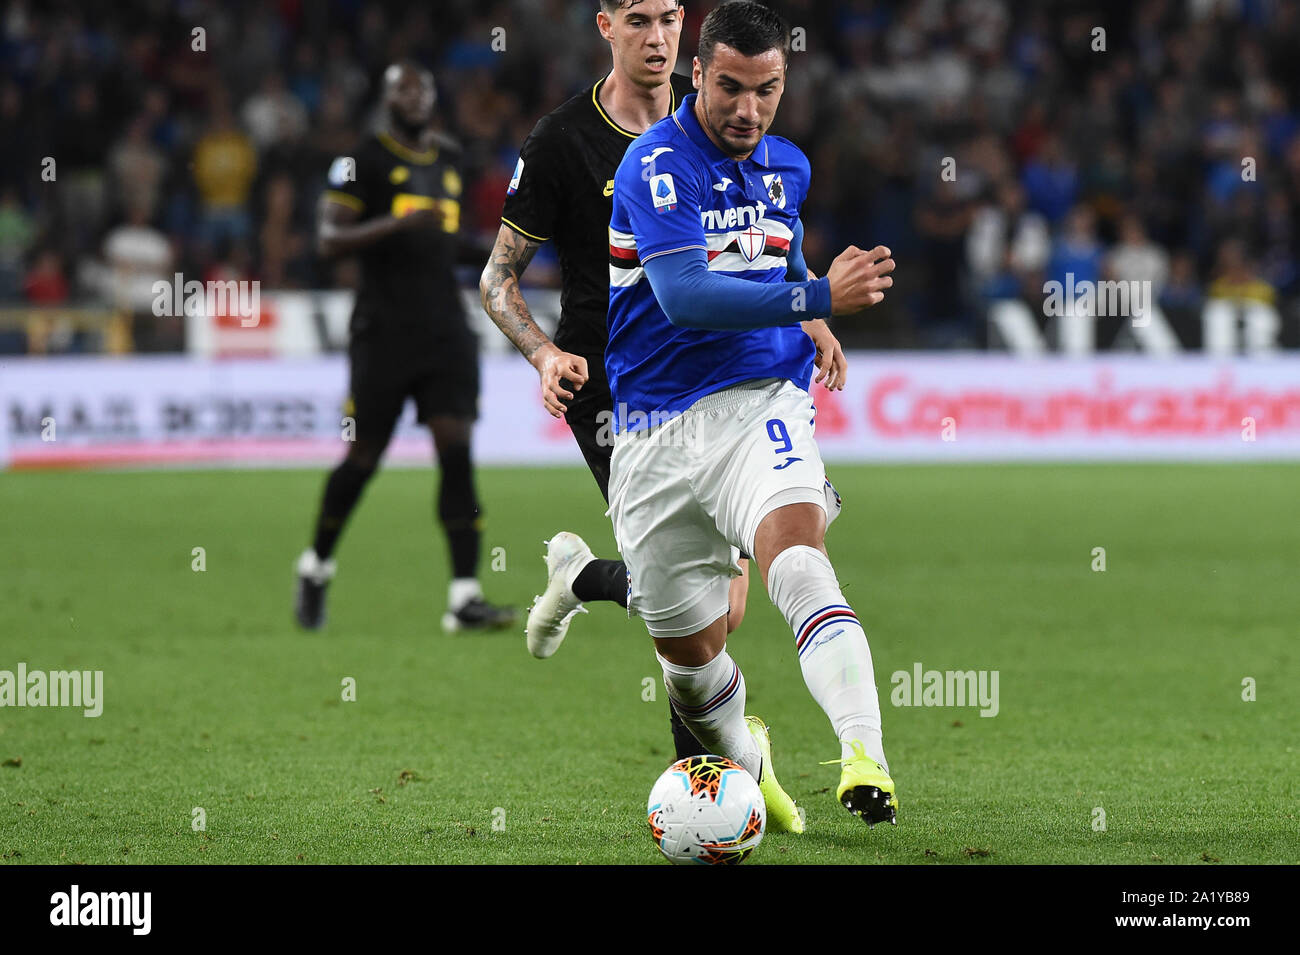 FEDERICONAZZOLI , SAMPDORIA,  during Sampdoria Vs Inter , Genova, Italy, 28 Sep 2019, Soccer Italian Soccer Serie A Men Championship Stock Photo